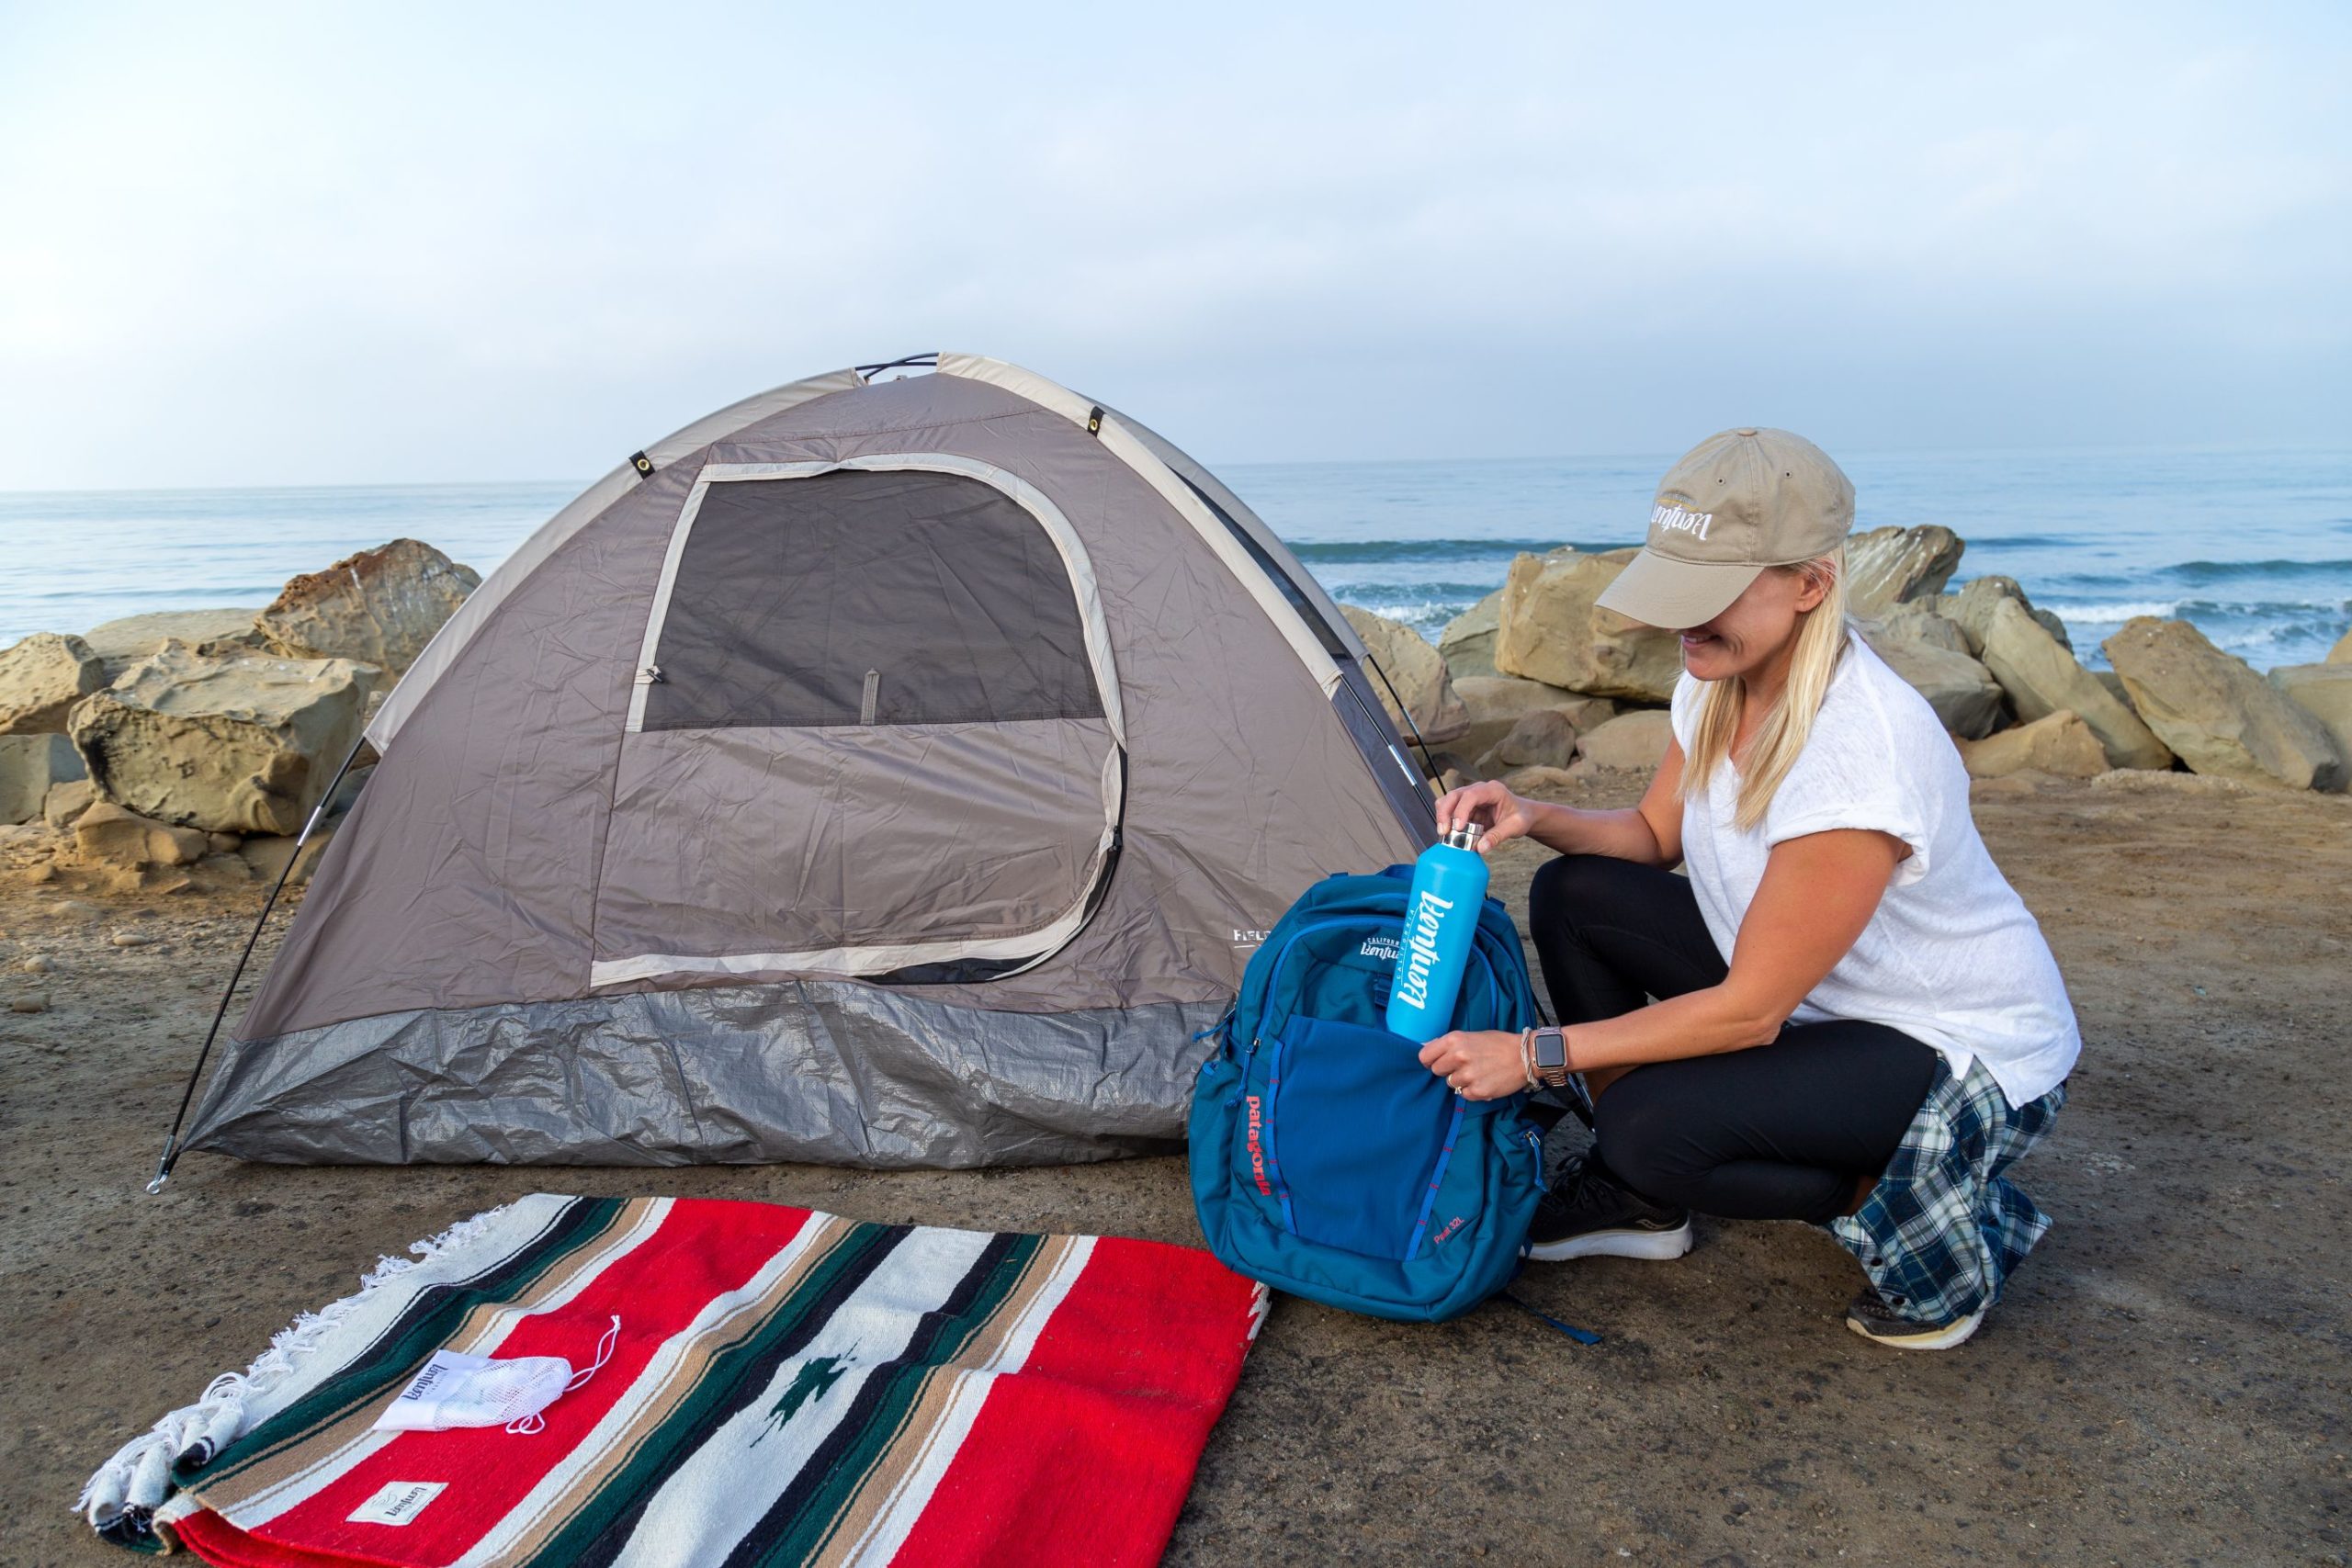 Camping in Ventura? Visit Ventura Has What You Need